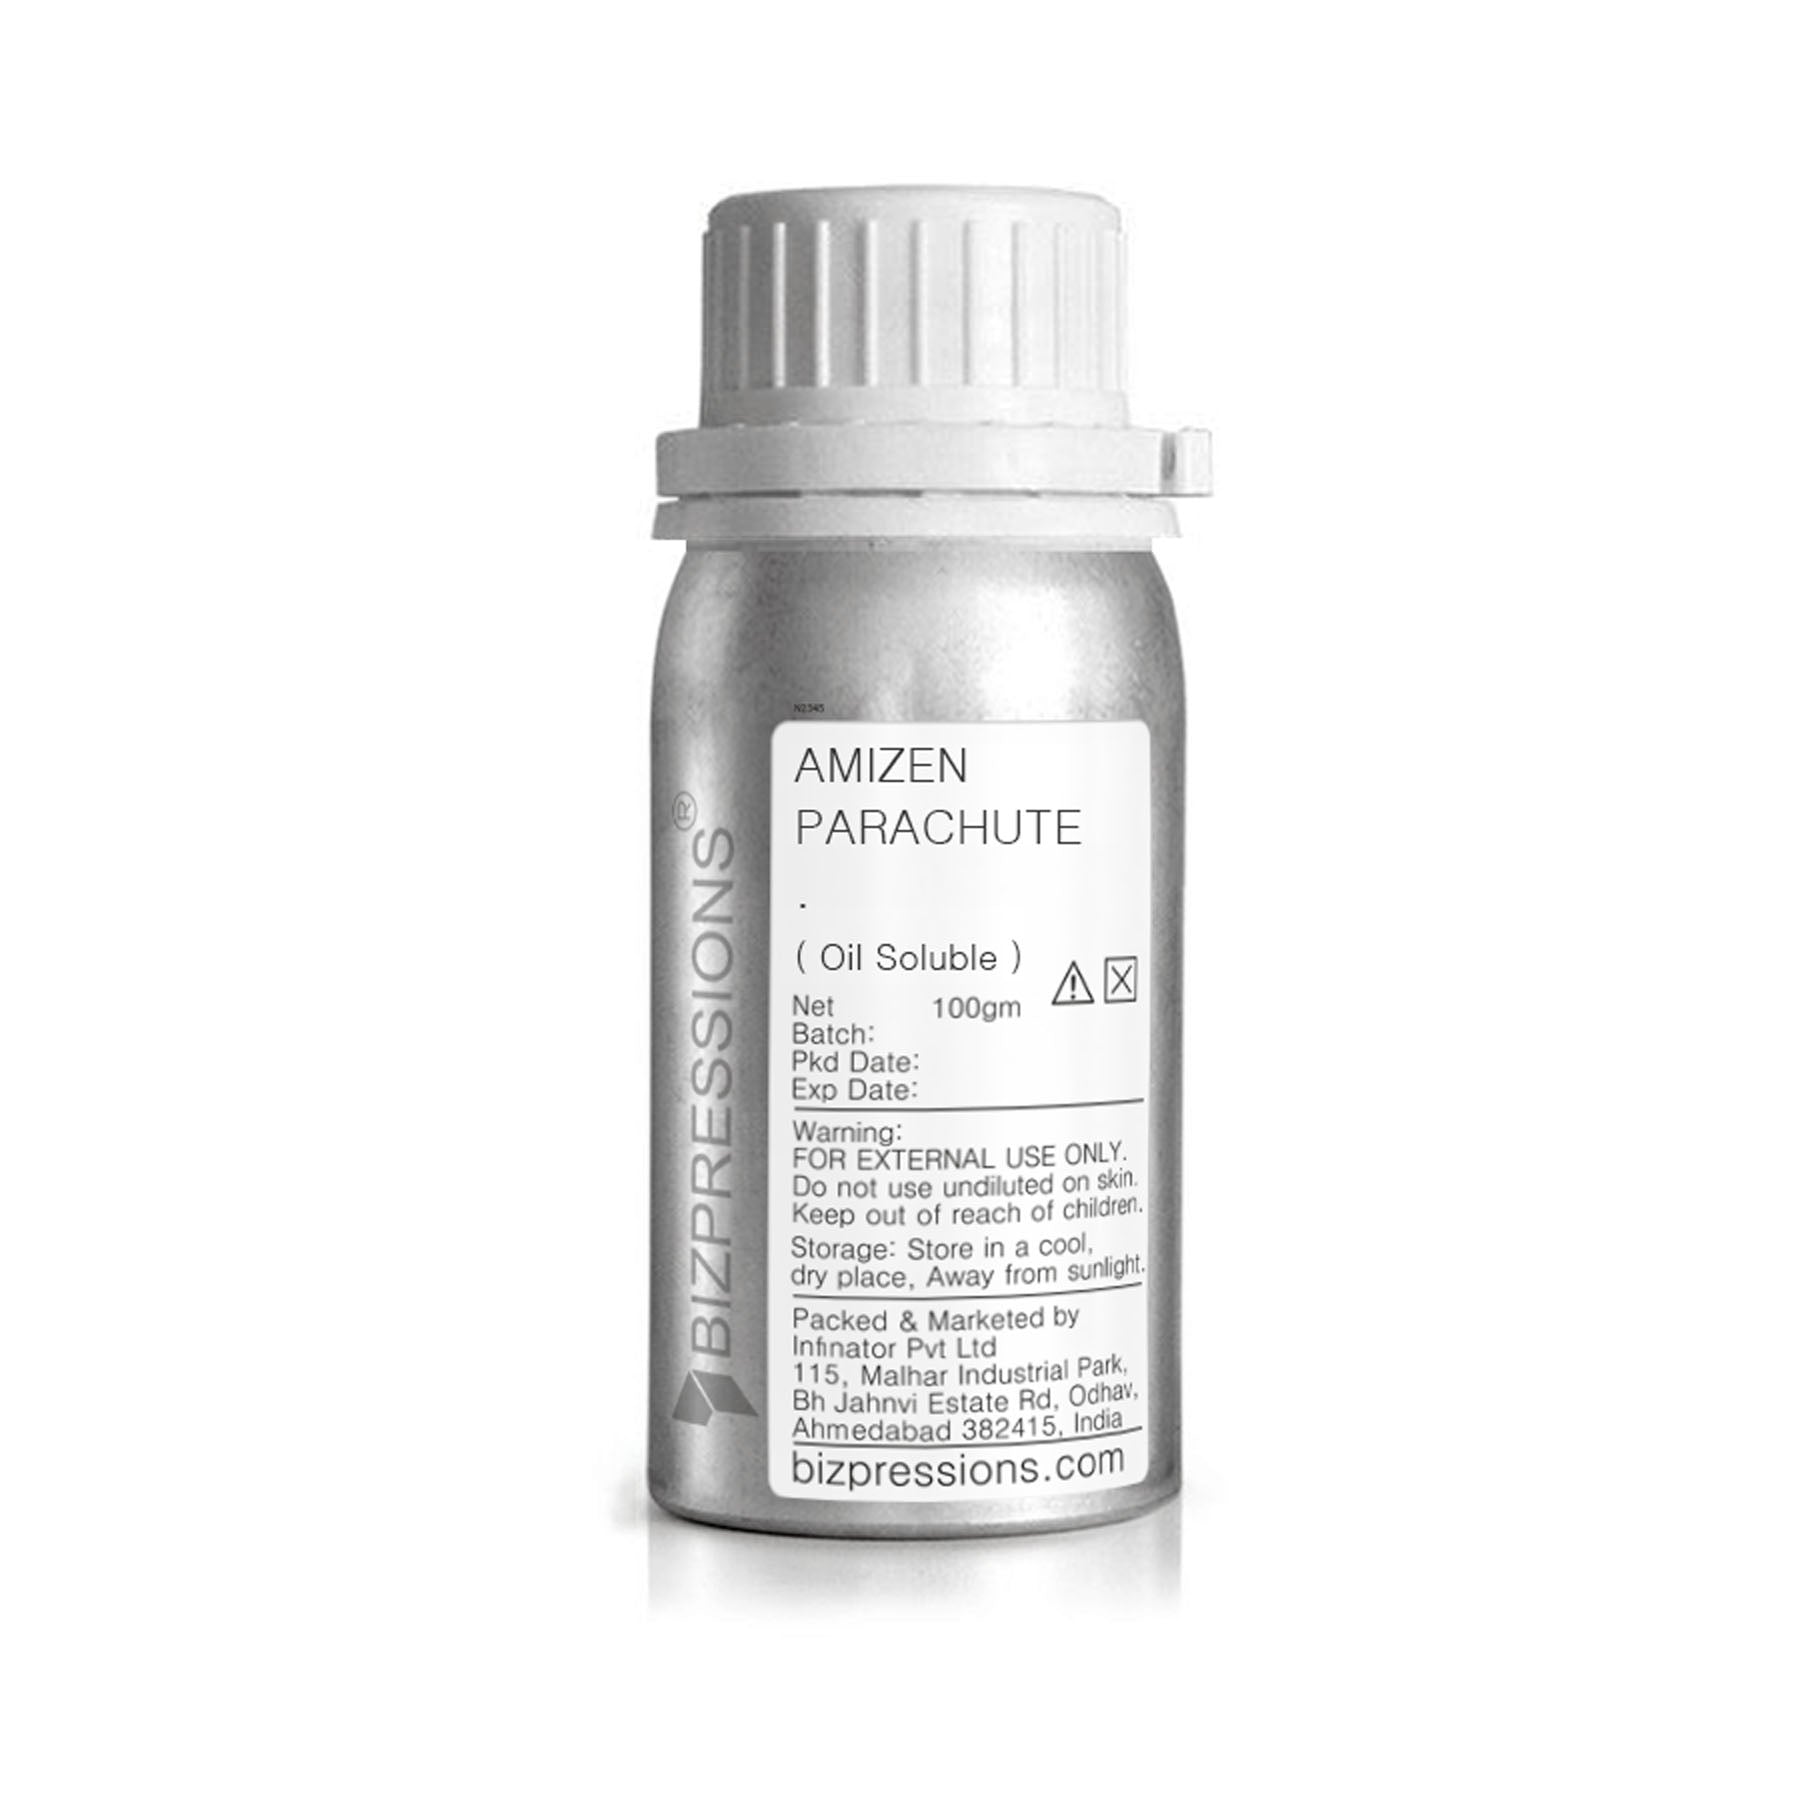 AMIZEN PARACHUTE - Fragrance ( Oil Soluble ) - 100 gm